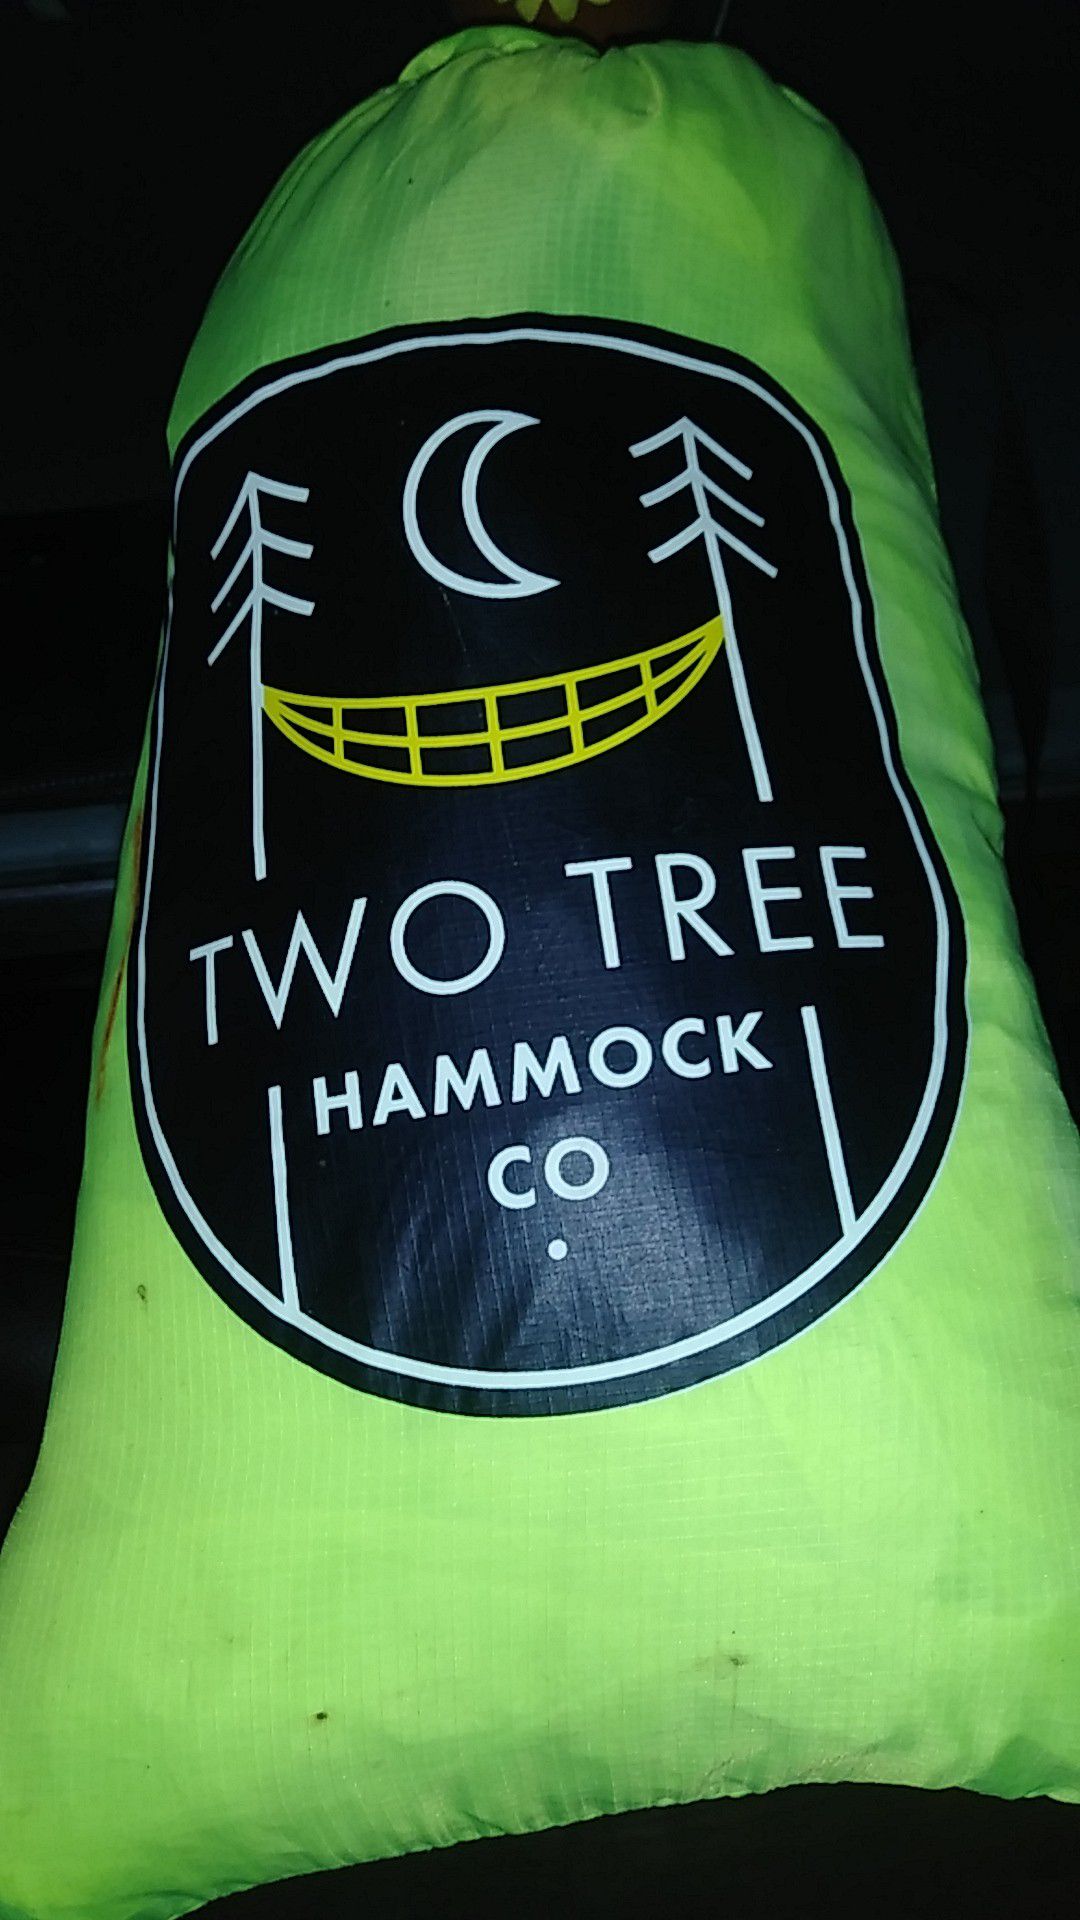 Two tree hammock